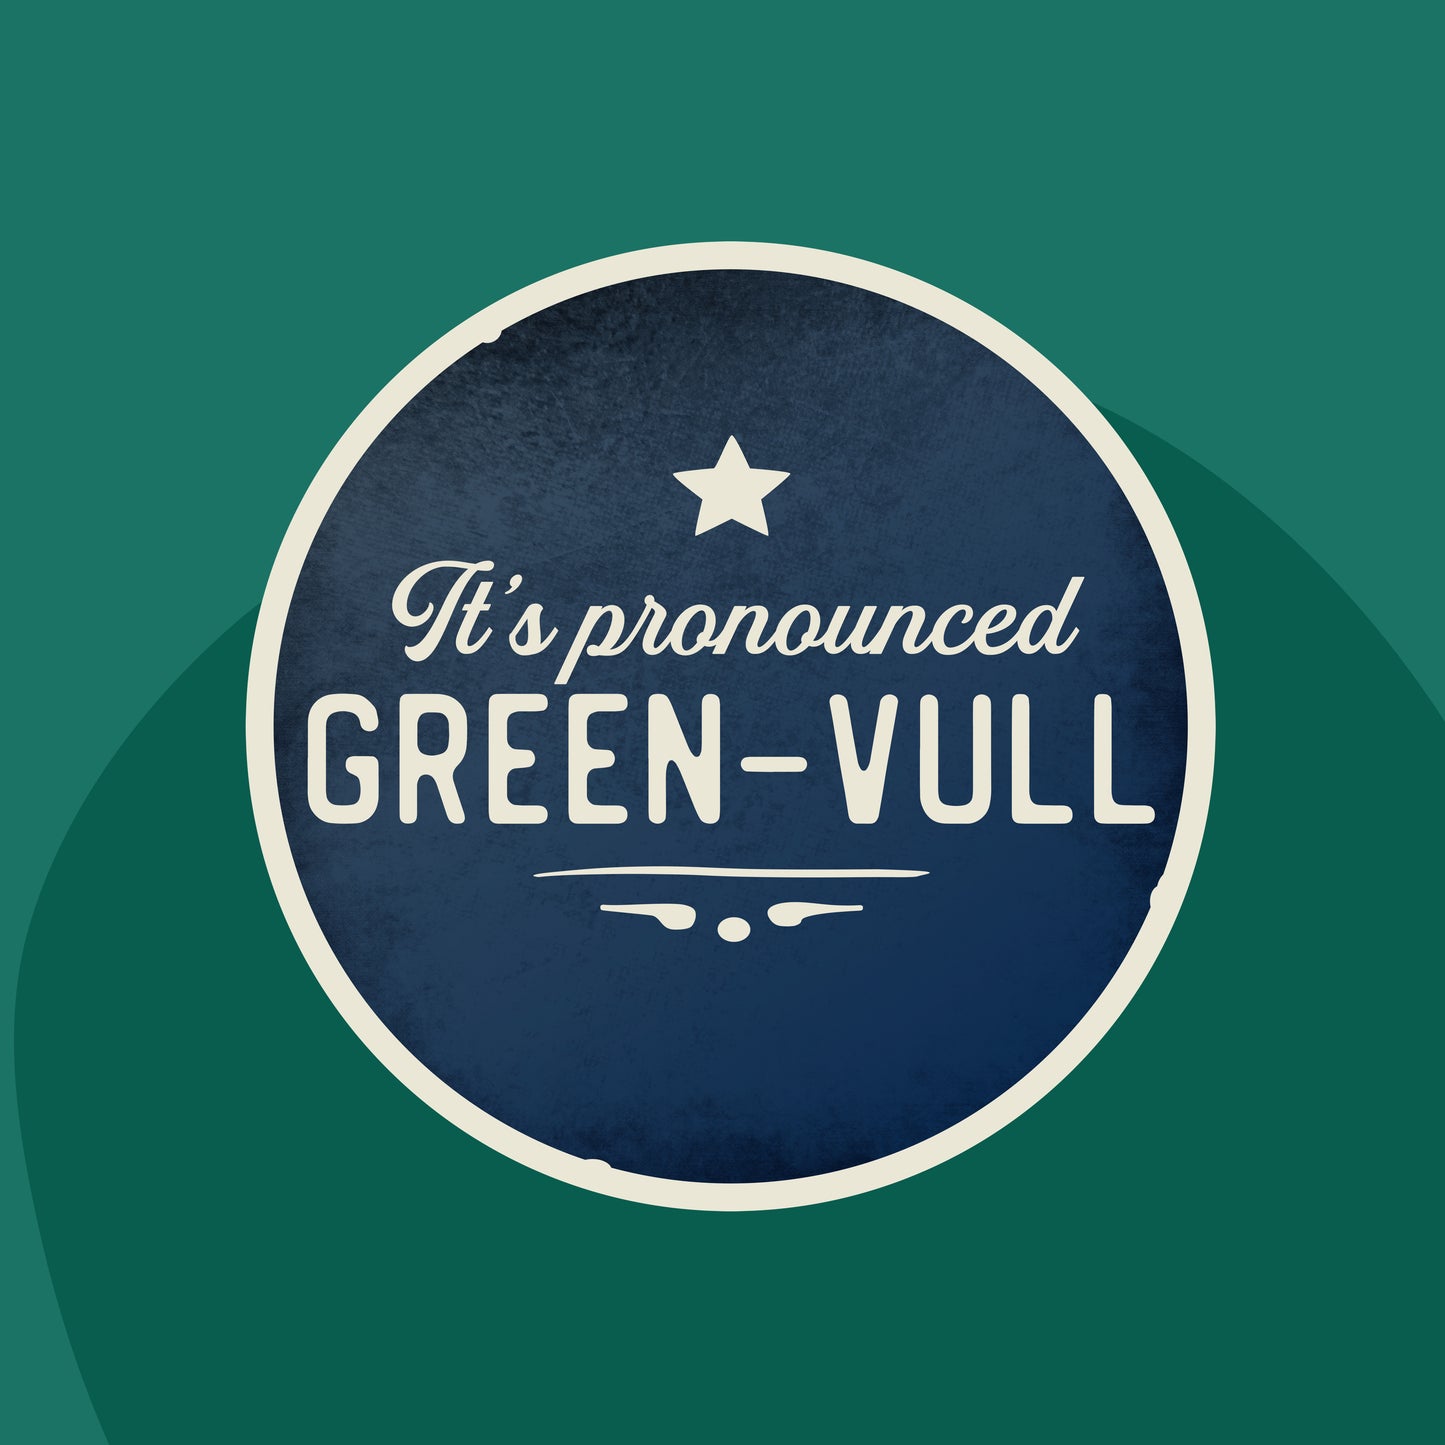 'It's pronounced GREEN-VULL' sticker